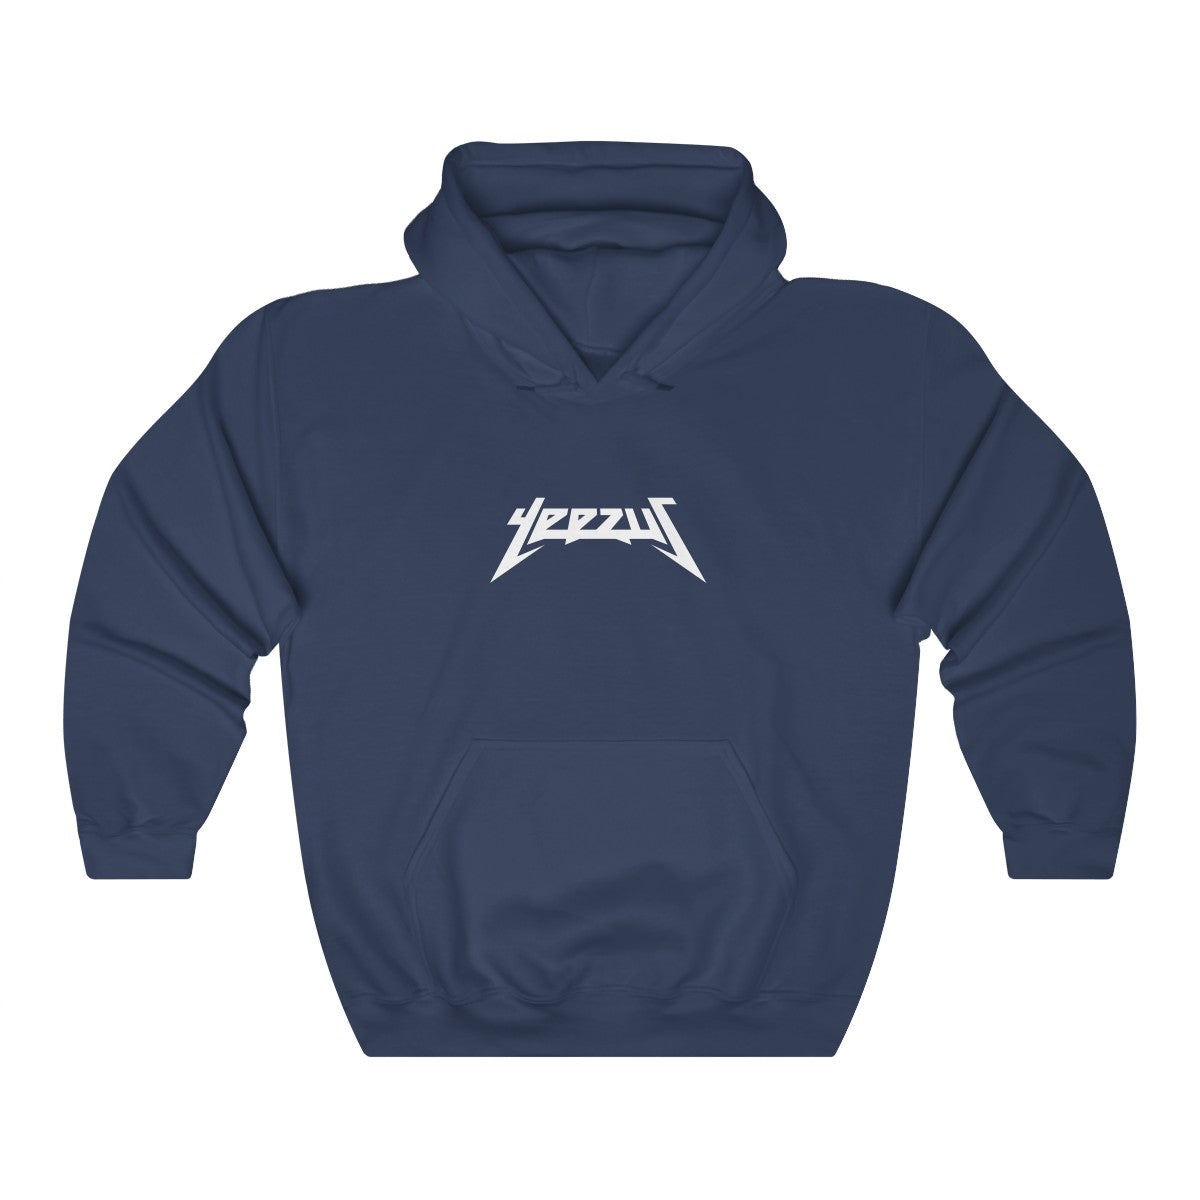 Yeezus Unisex Heavy Blend Hooded Sweatshirt-Navy-S-Archethype